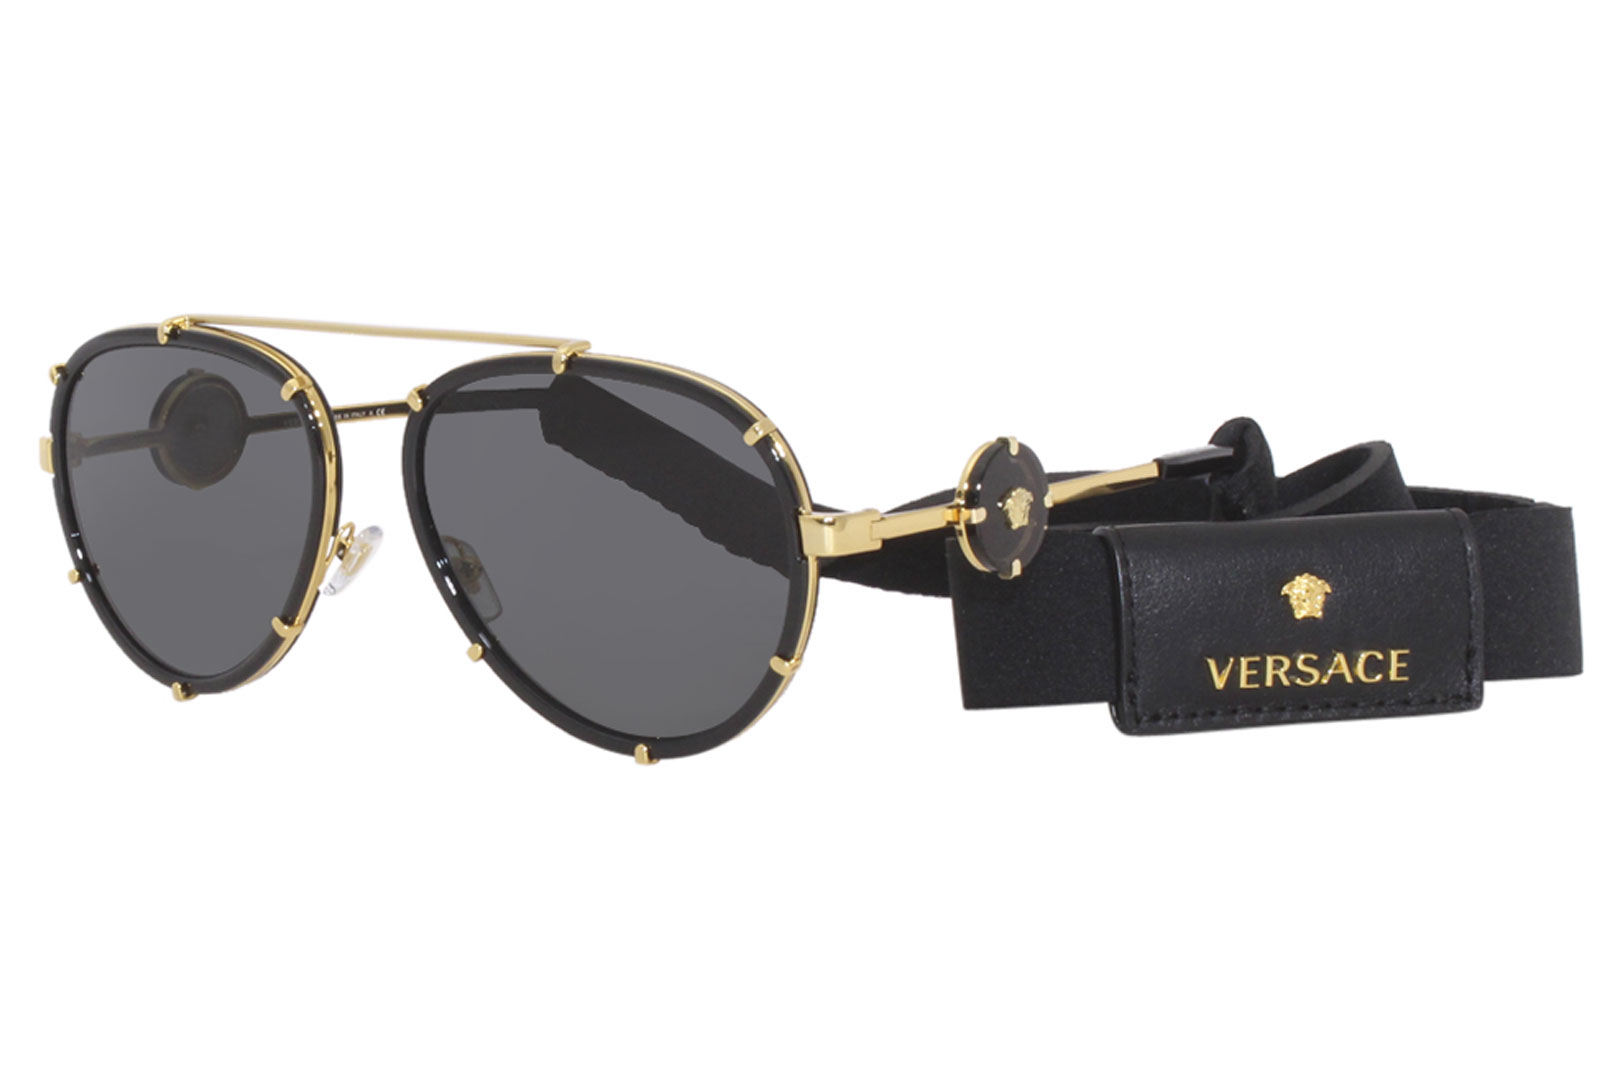 https://www.eyespecs.com/gallery-option/554277924/1/versace-ve2232-sunglasses-womens-fashion-pilot-w-neck-strap-black-gold-medusa-grey-black-neck-strap-143887-1.jpg